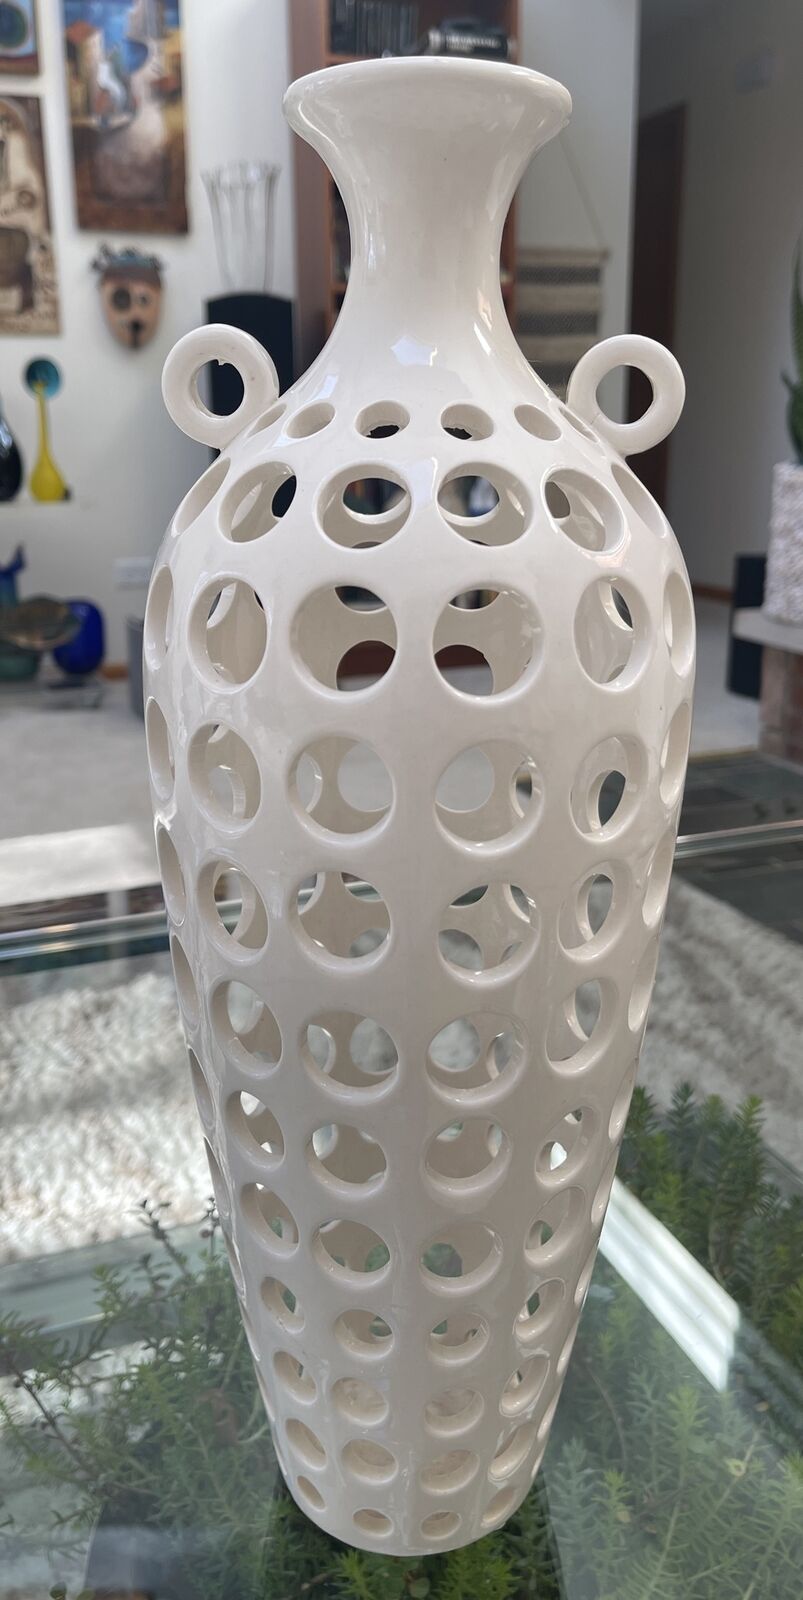 VTG White Pierced Glazed Clay Ceramic Vase Shaped Vessel Sculpture Urban Design